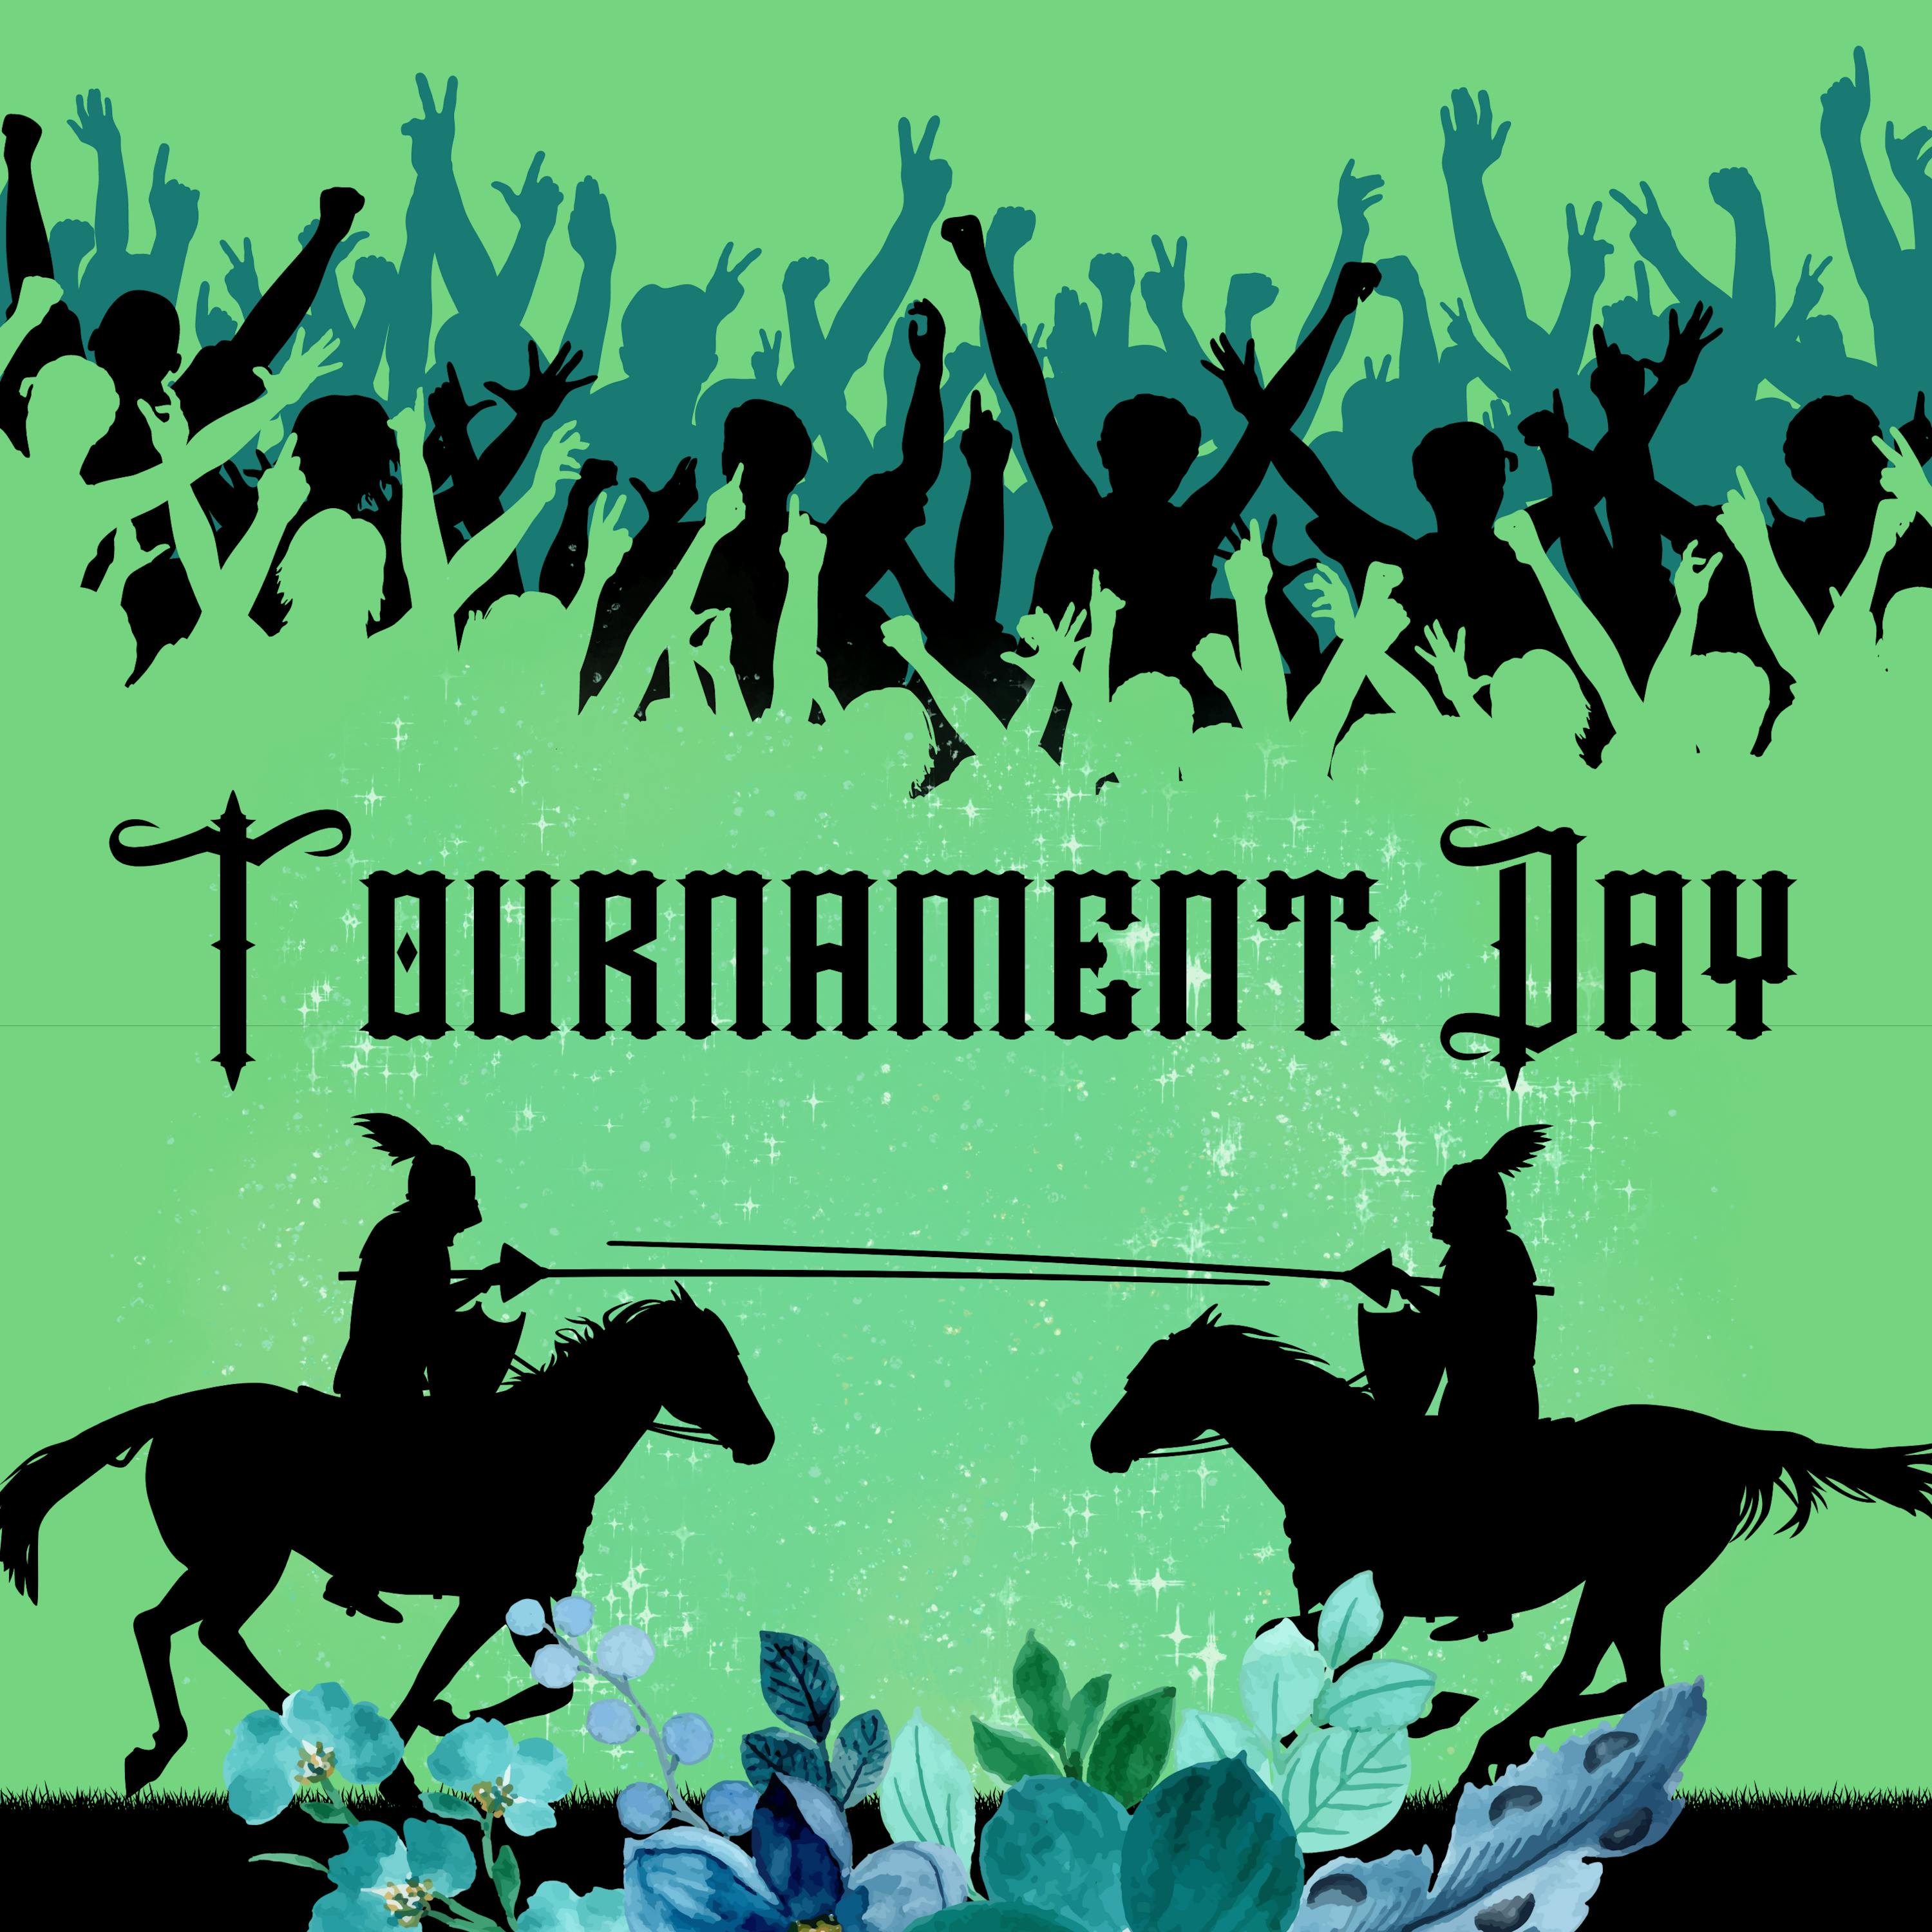 3.7 Tournament Day